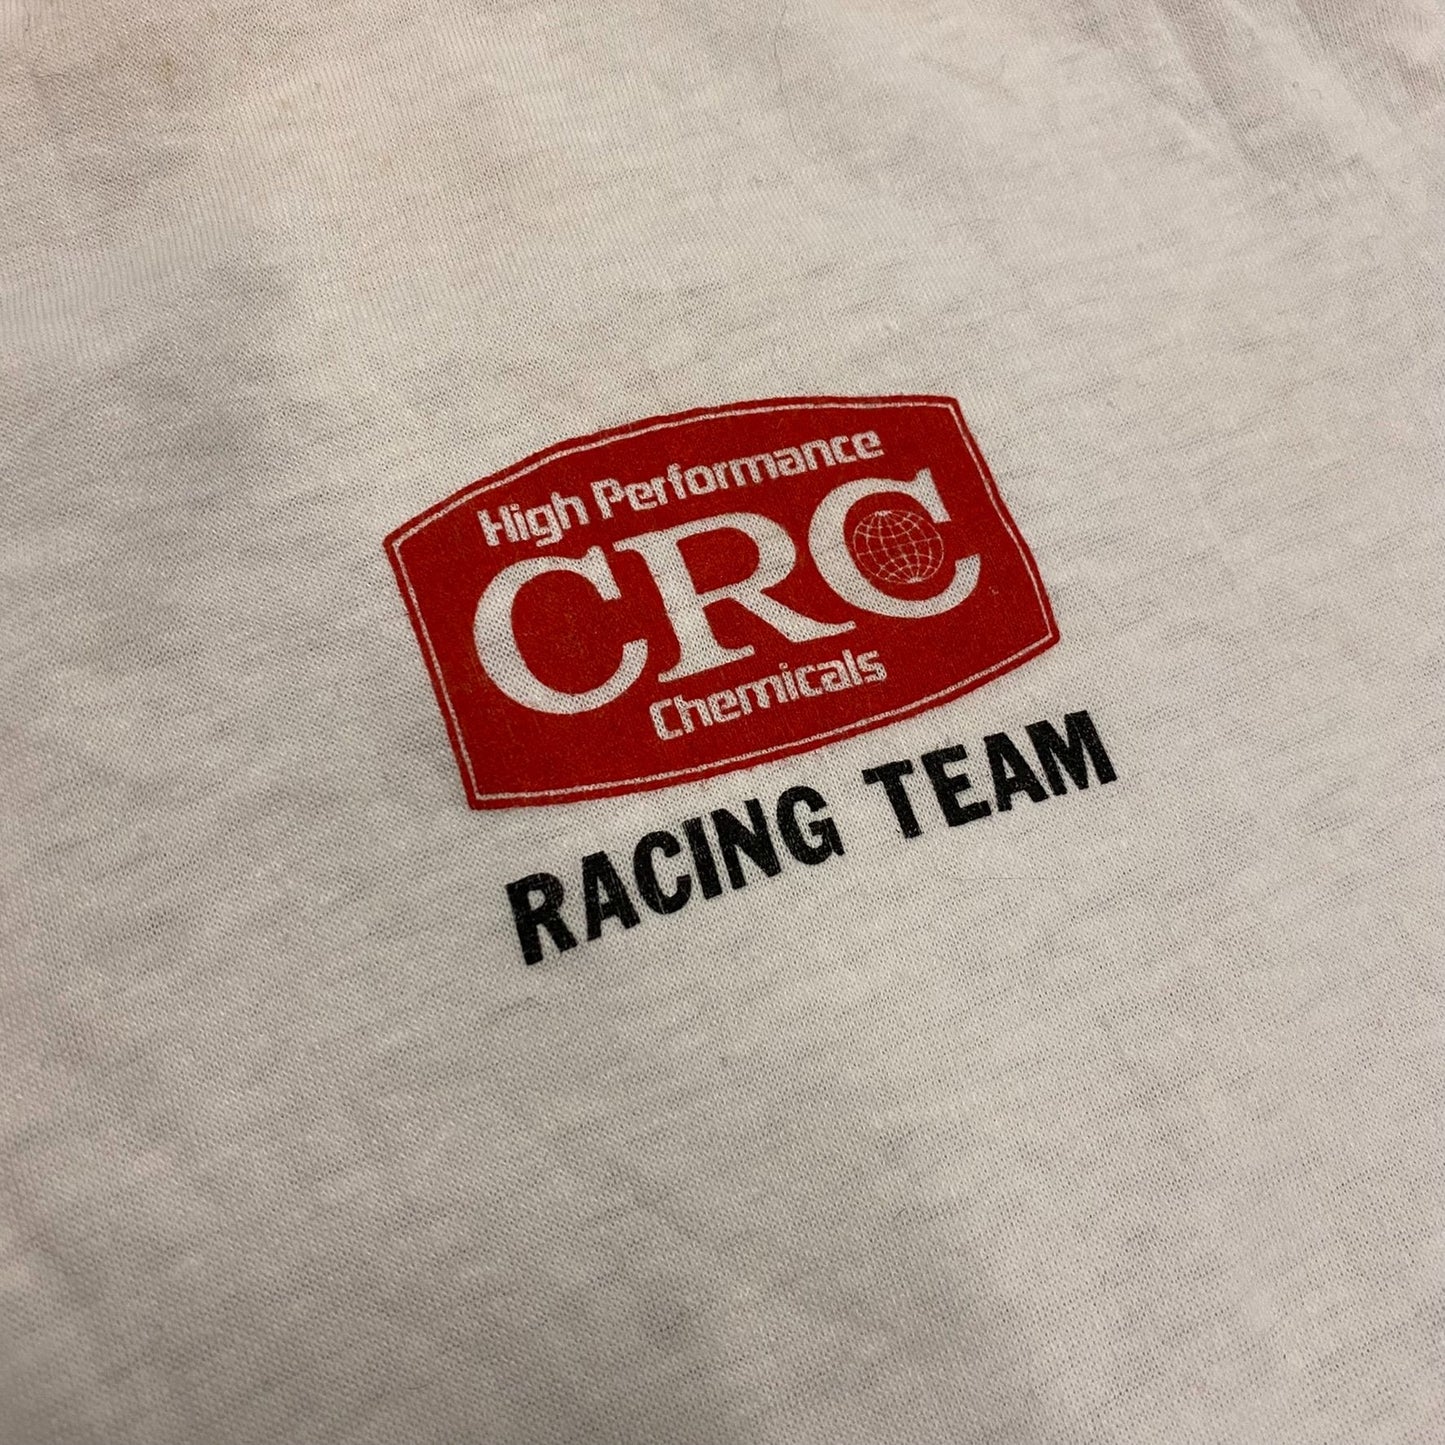 Vintage 80s Essential CRC Racing Single Stitch T-Shirt